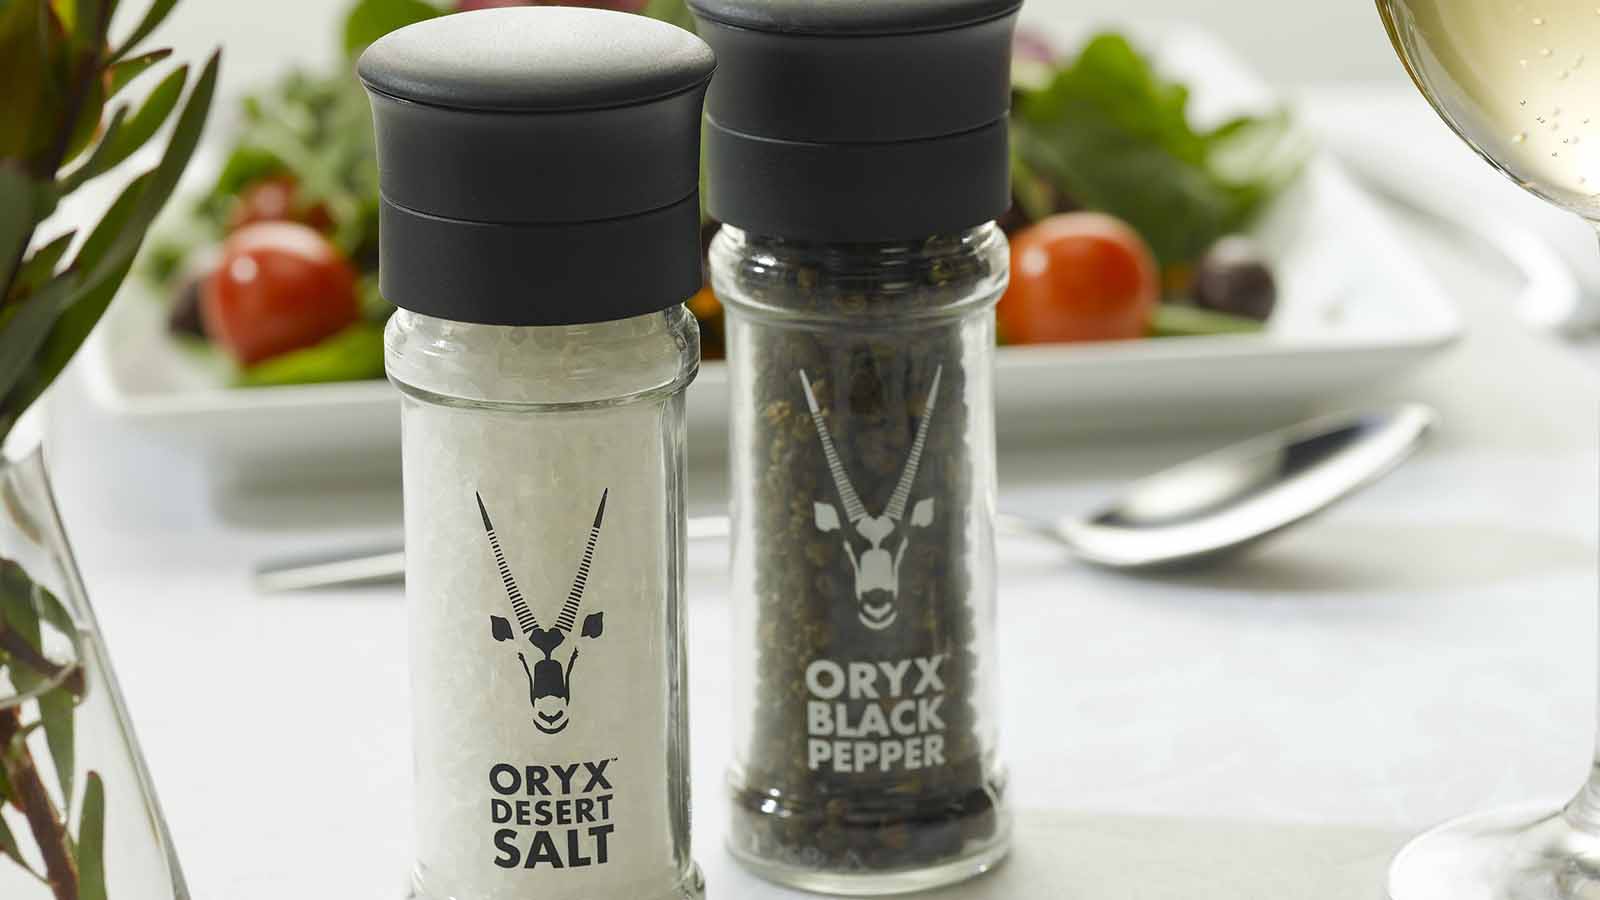 South Africa’s local seasoning Oryx Desert Salt to hit shelves in USA